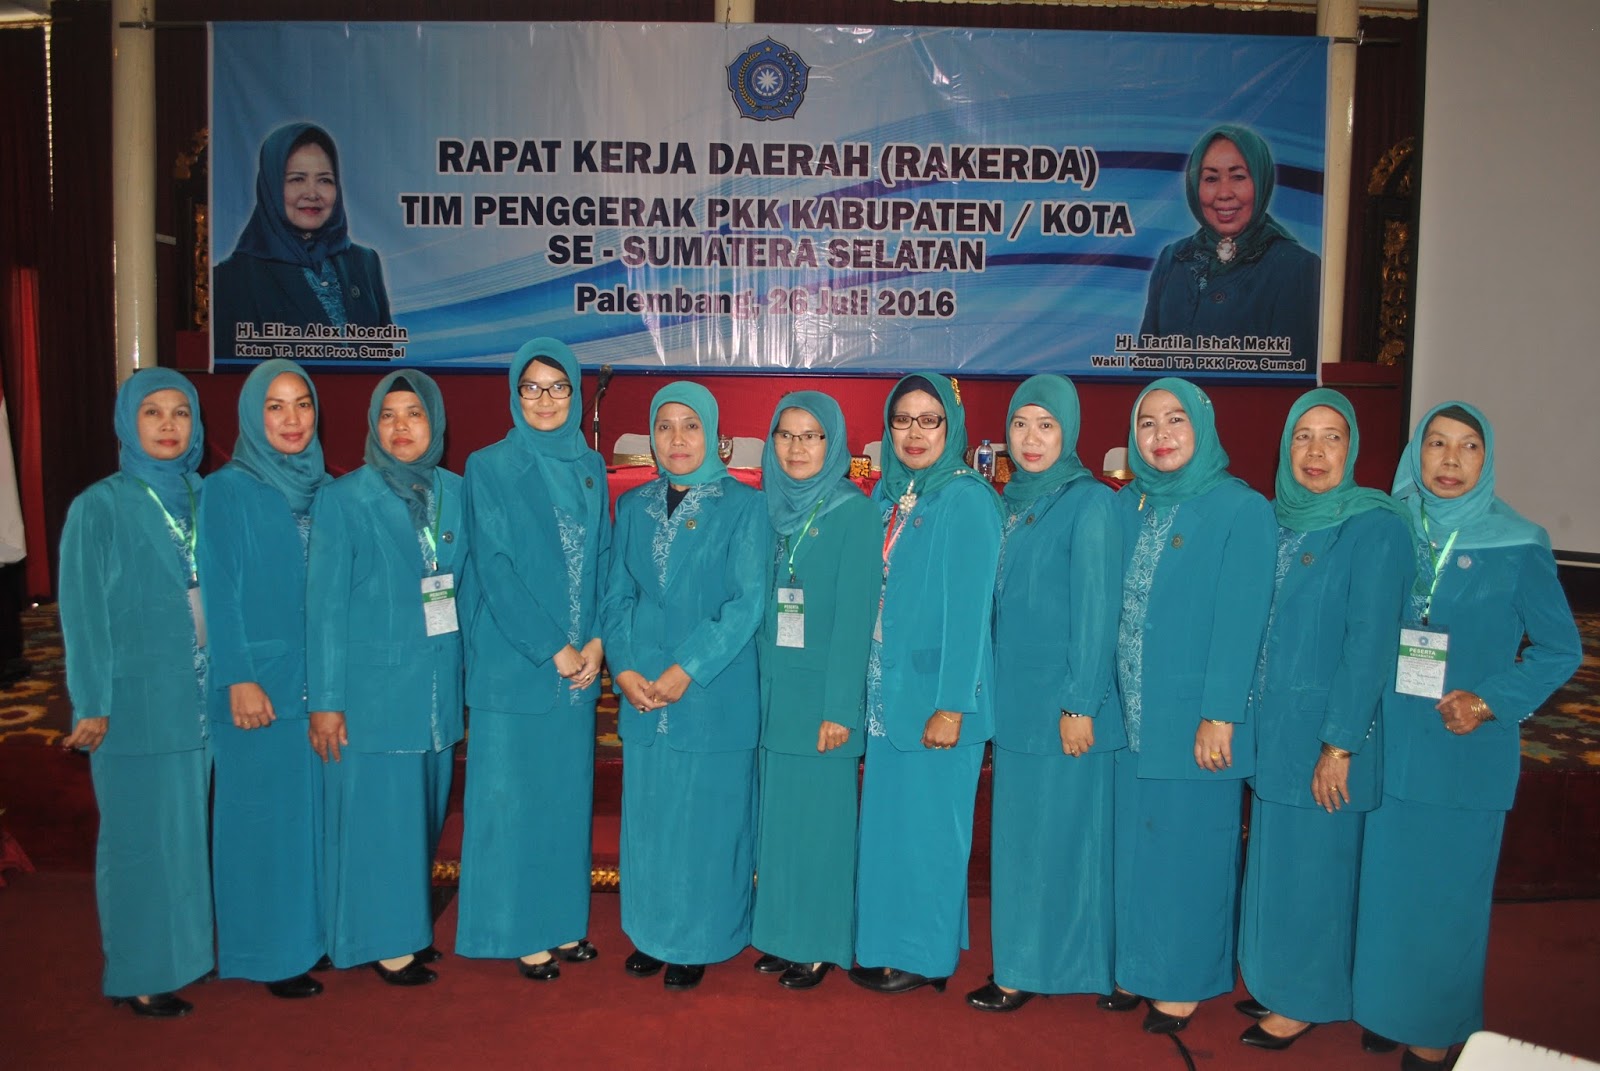 Palembang Ketua Tim Penggerak Pkk Kabupaten Ogan Ilir Beserta Anggota Hadiri Rapat Kerja Daerah Rakerda Se Sumatera Selatan Di Palembang Hari Selasa